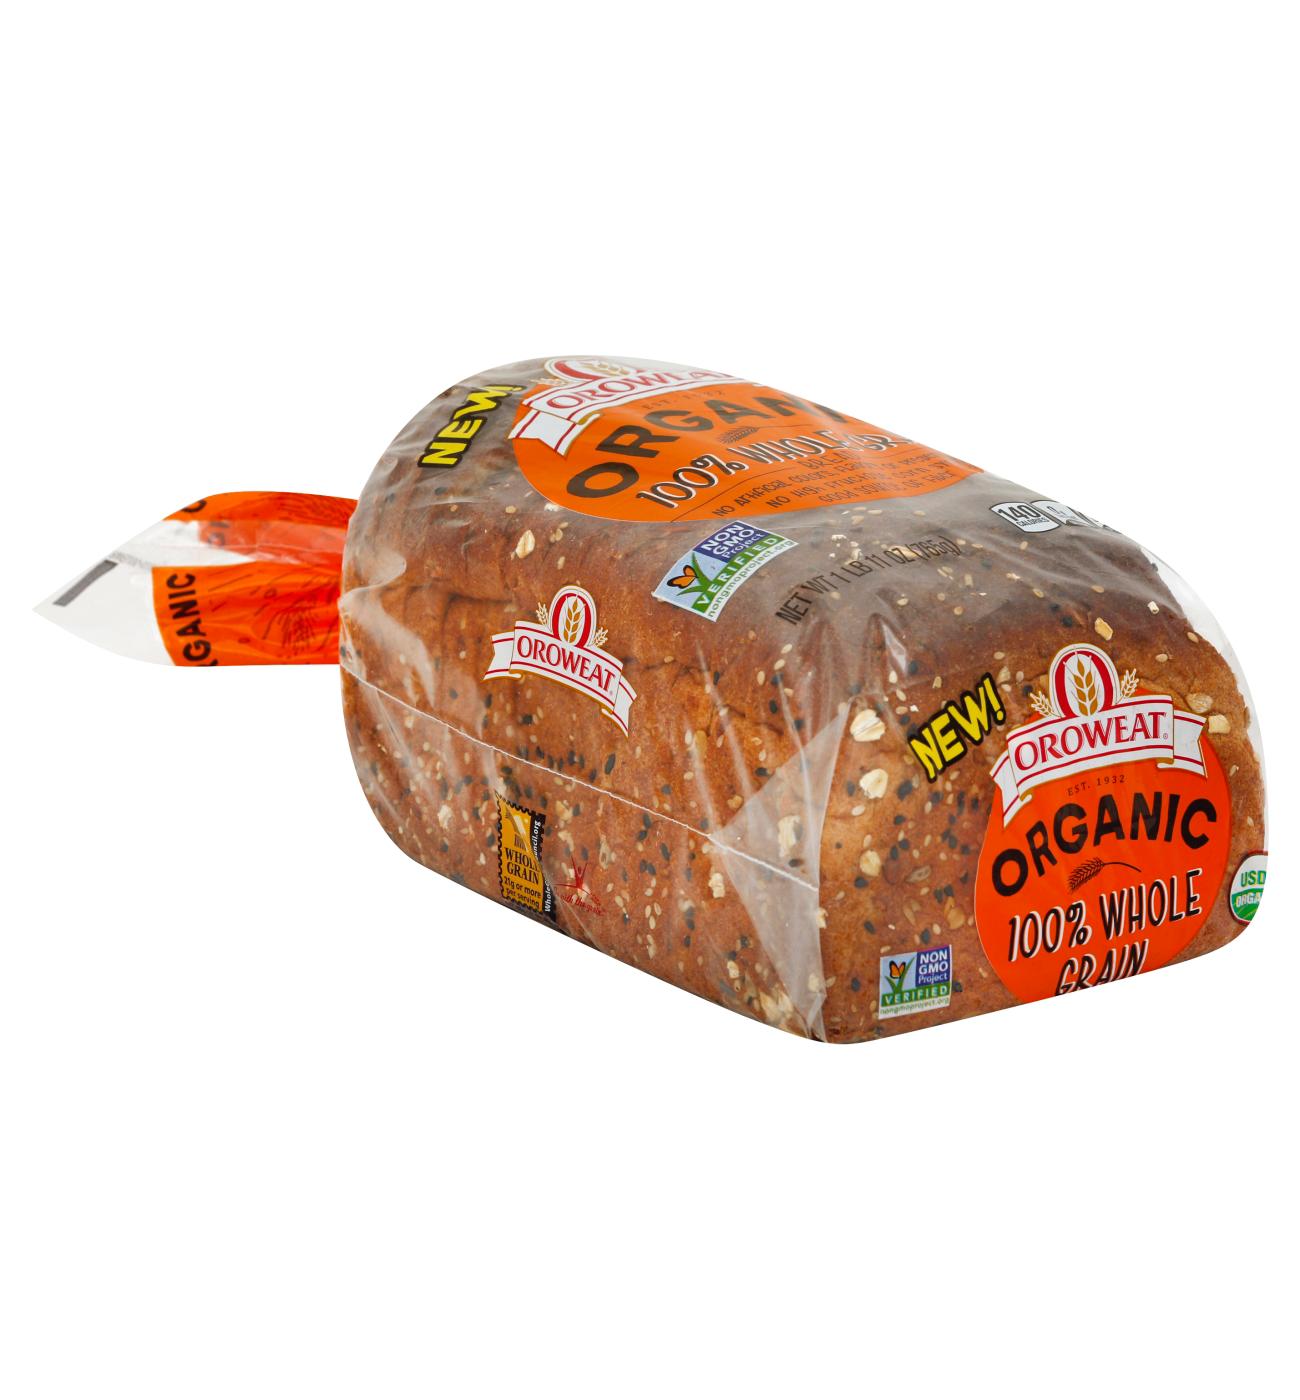 Oroweat Organic 100% Whole Grain Bread; image 2 of 2